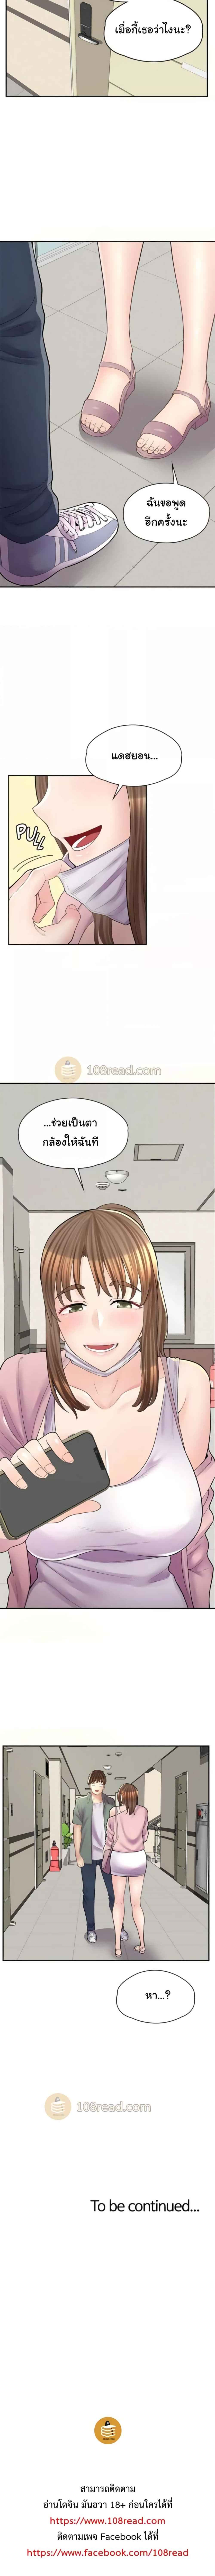 Erotic Manga Café Girls 13 (1)